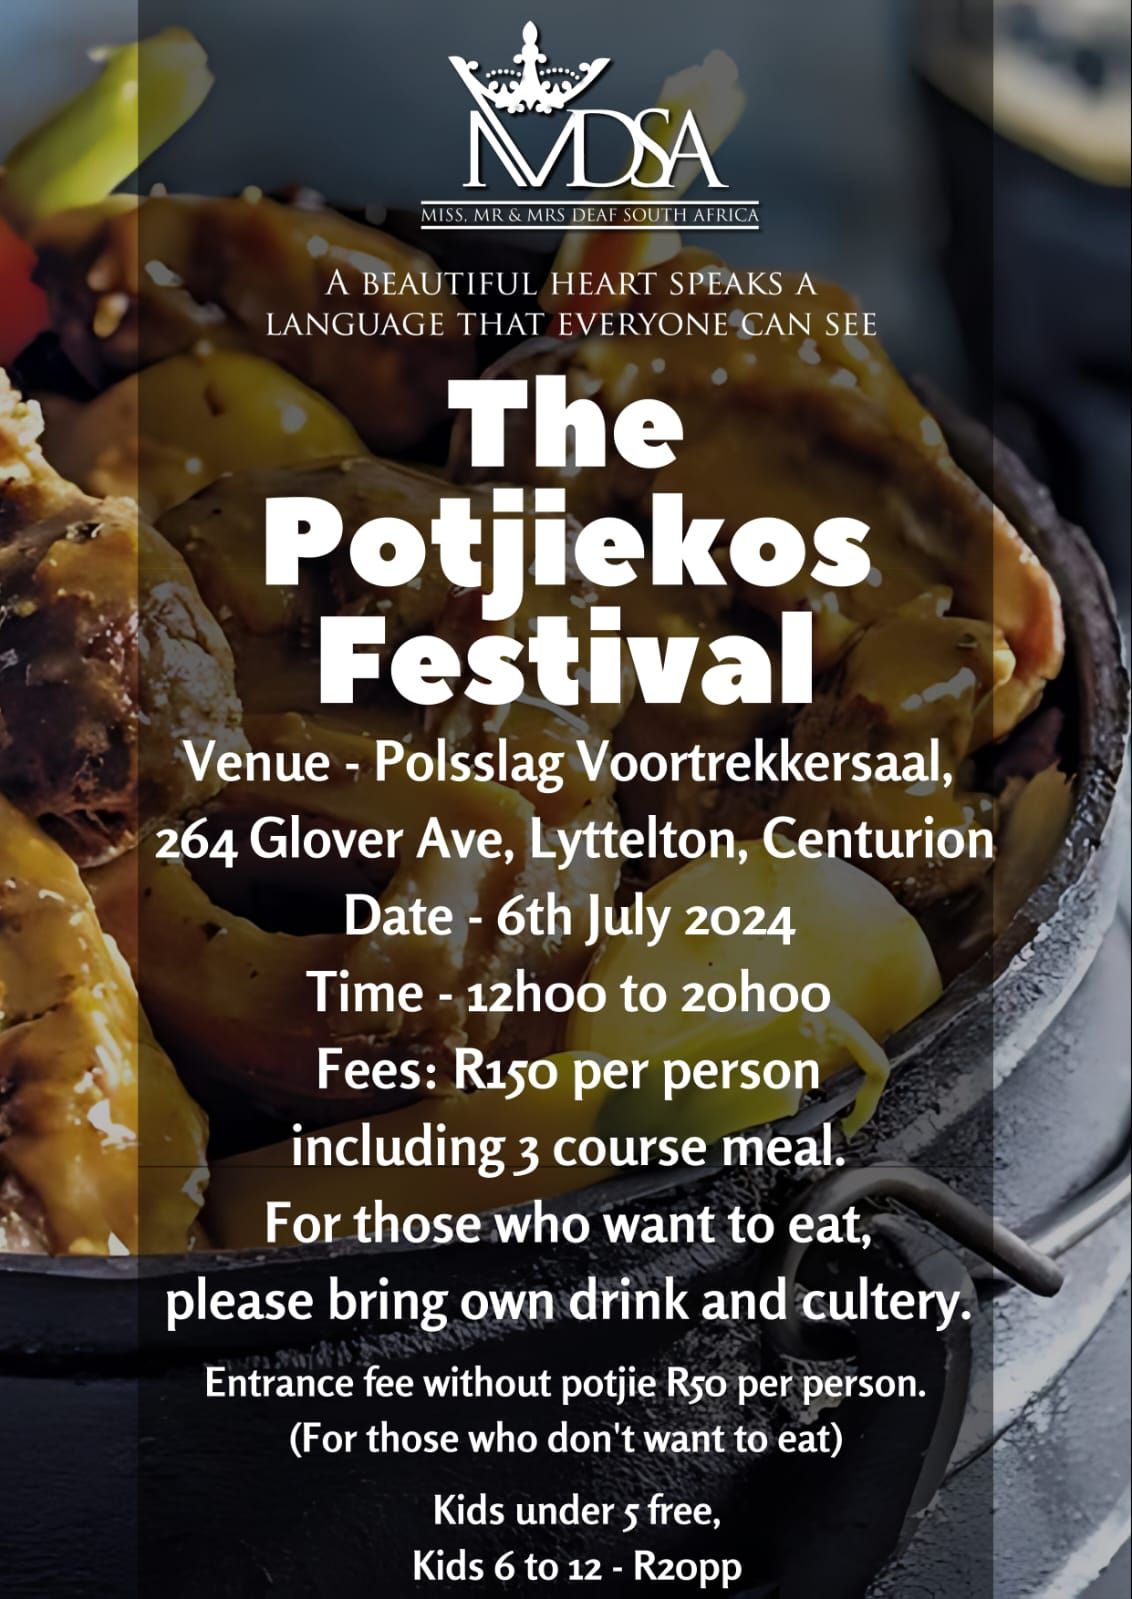 The Potjiekos Festival